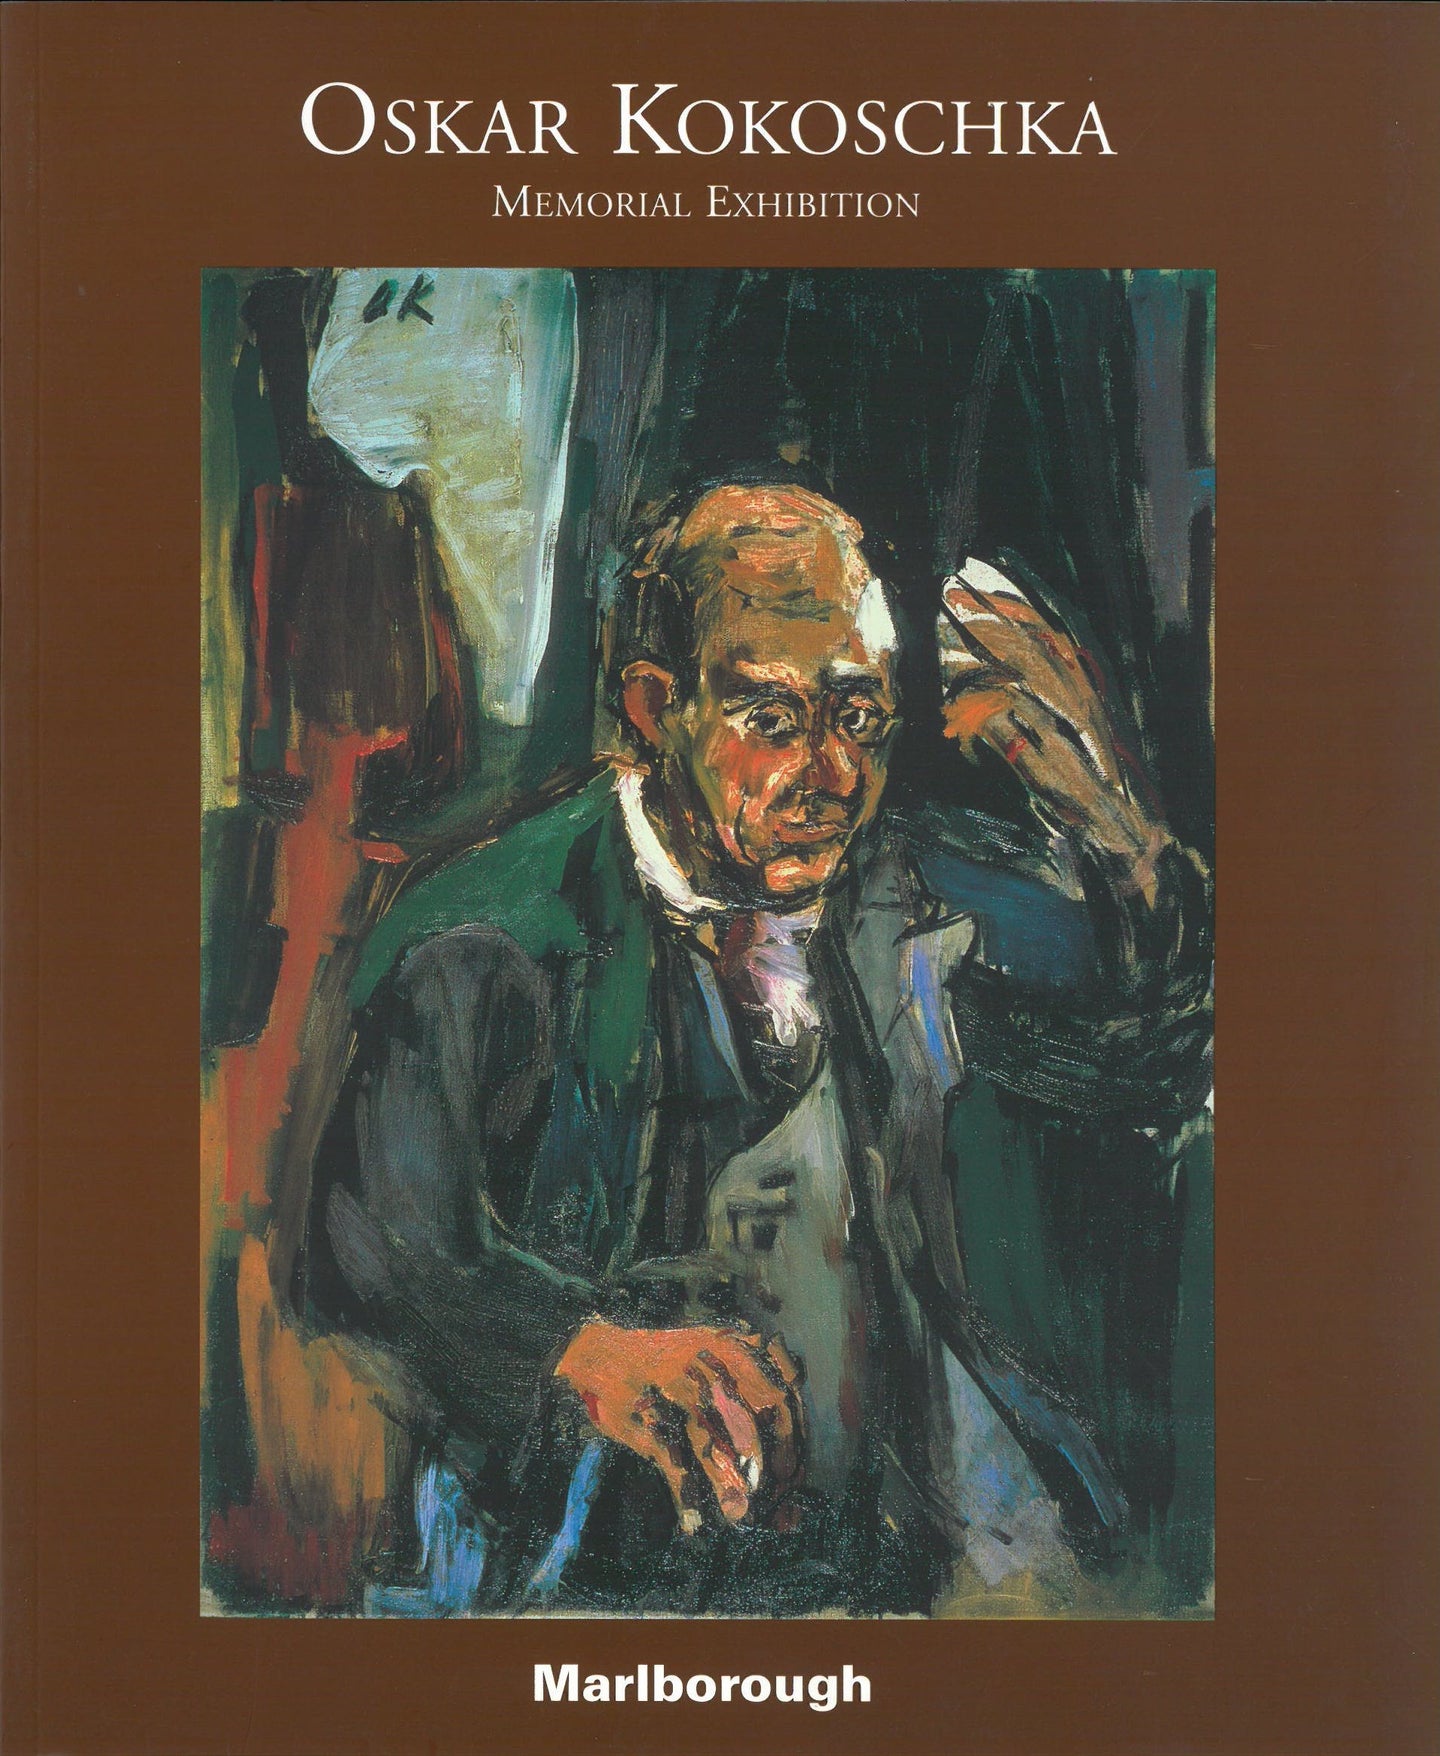 Kokoschka catalogue cover featuring a painting of a man